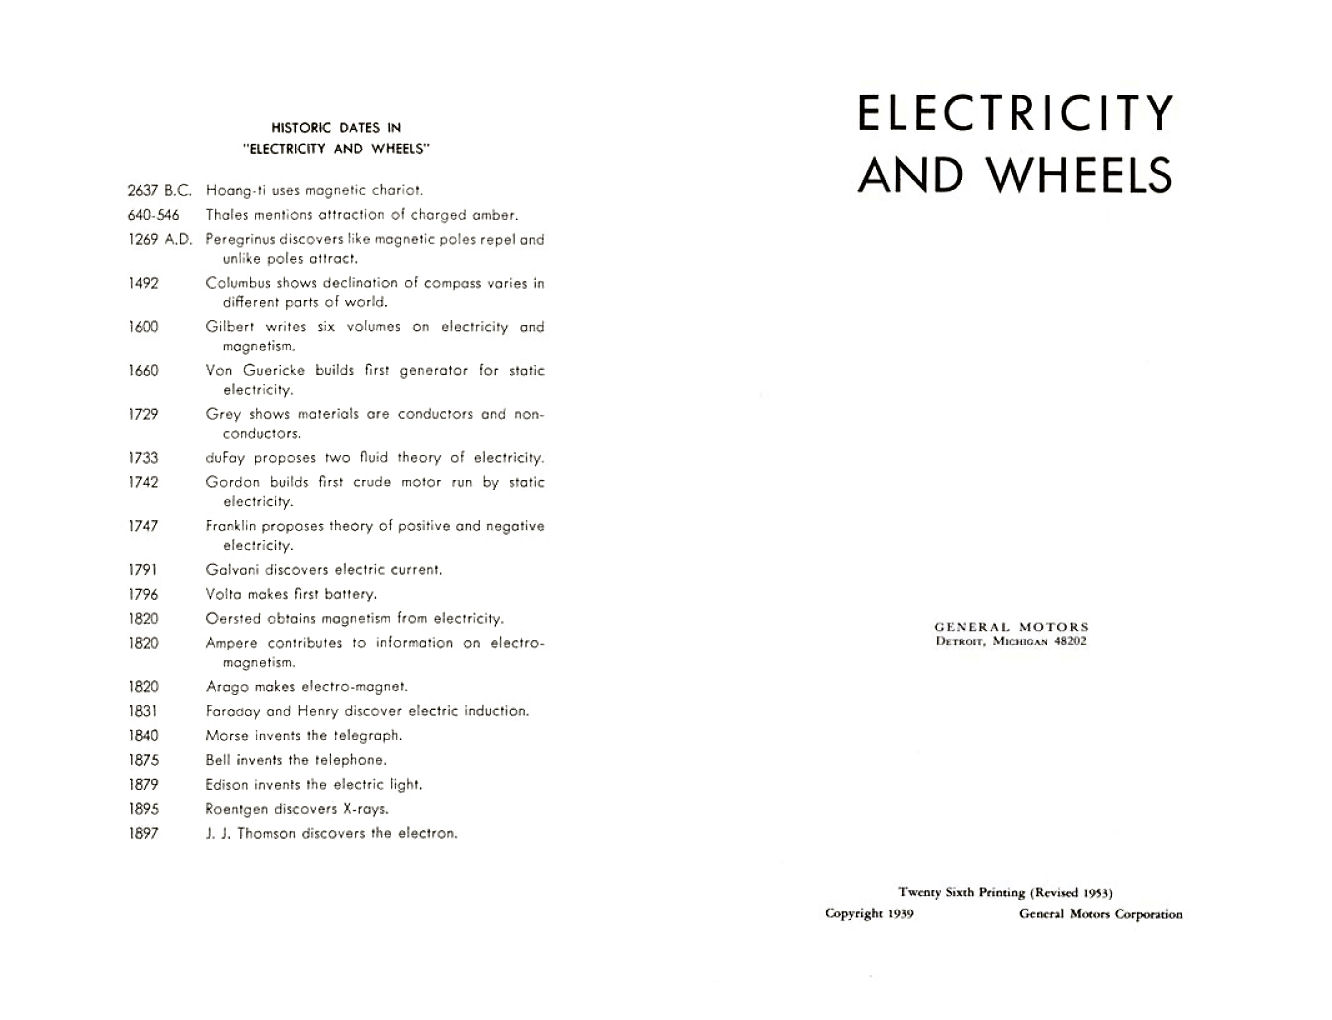 n_1953-Electricity and Wheels-00a-01.jpg